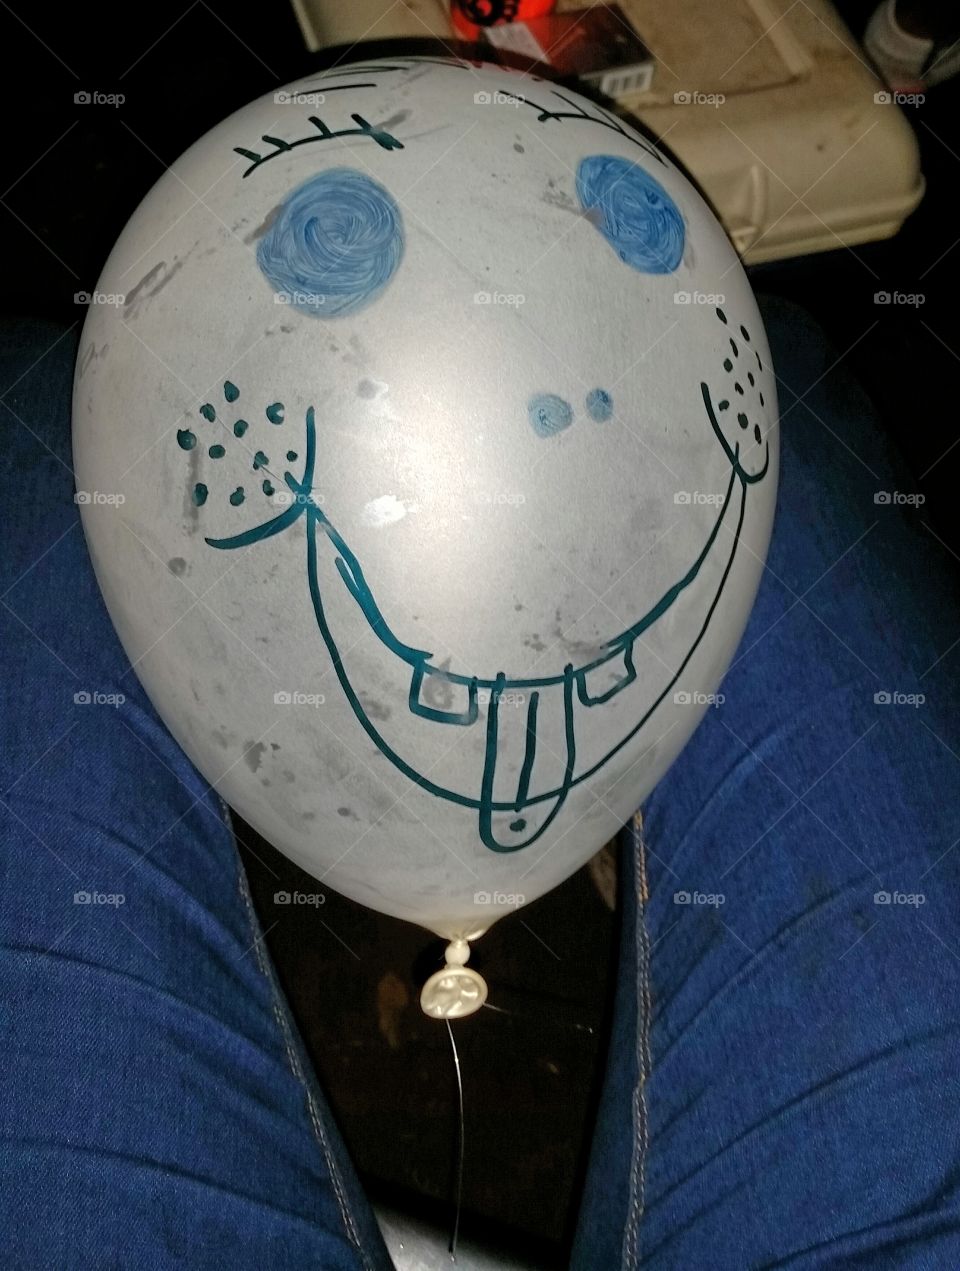 Balloon drawing